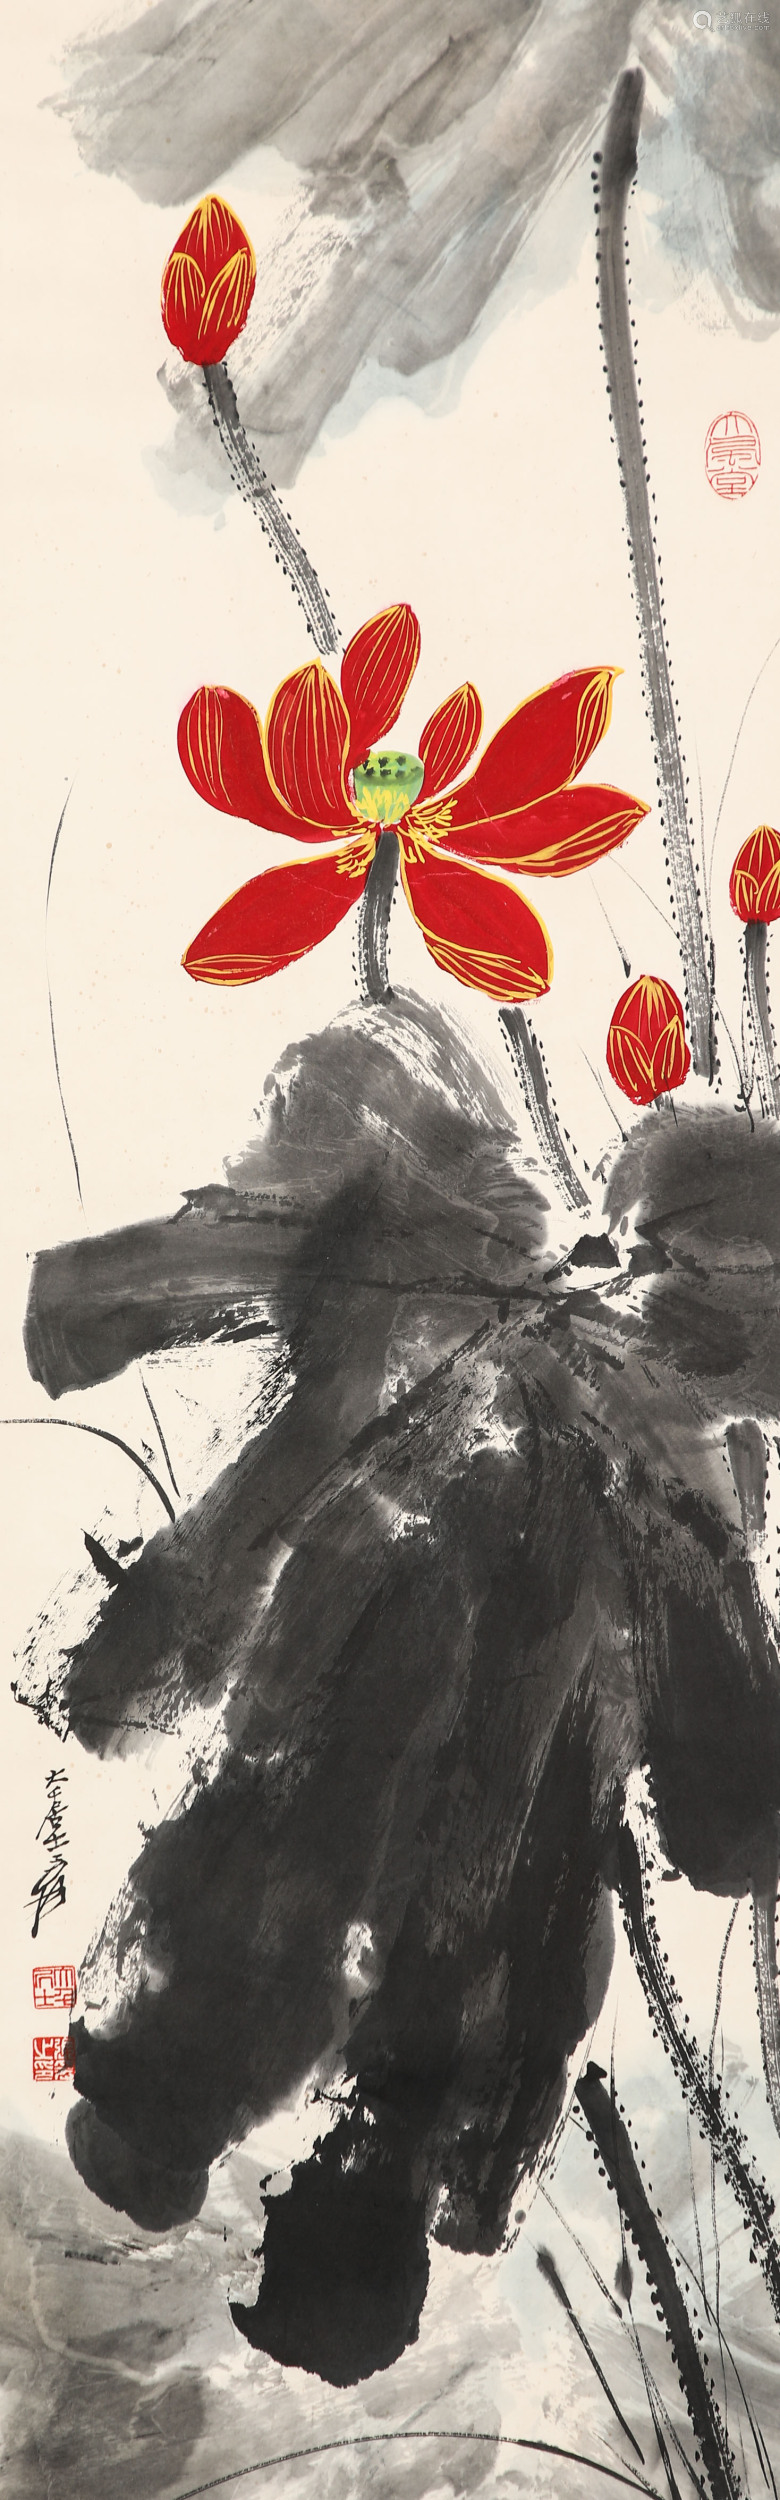 Chinese ink painting,
Zhang Daqian's Four Ink Lotus Screens